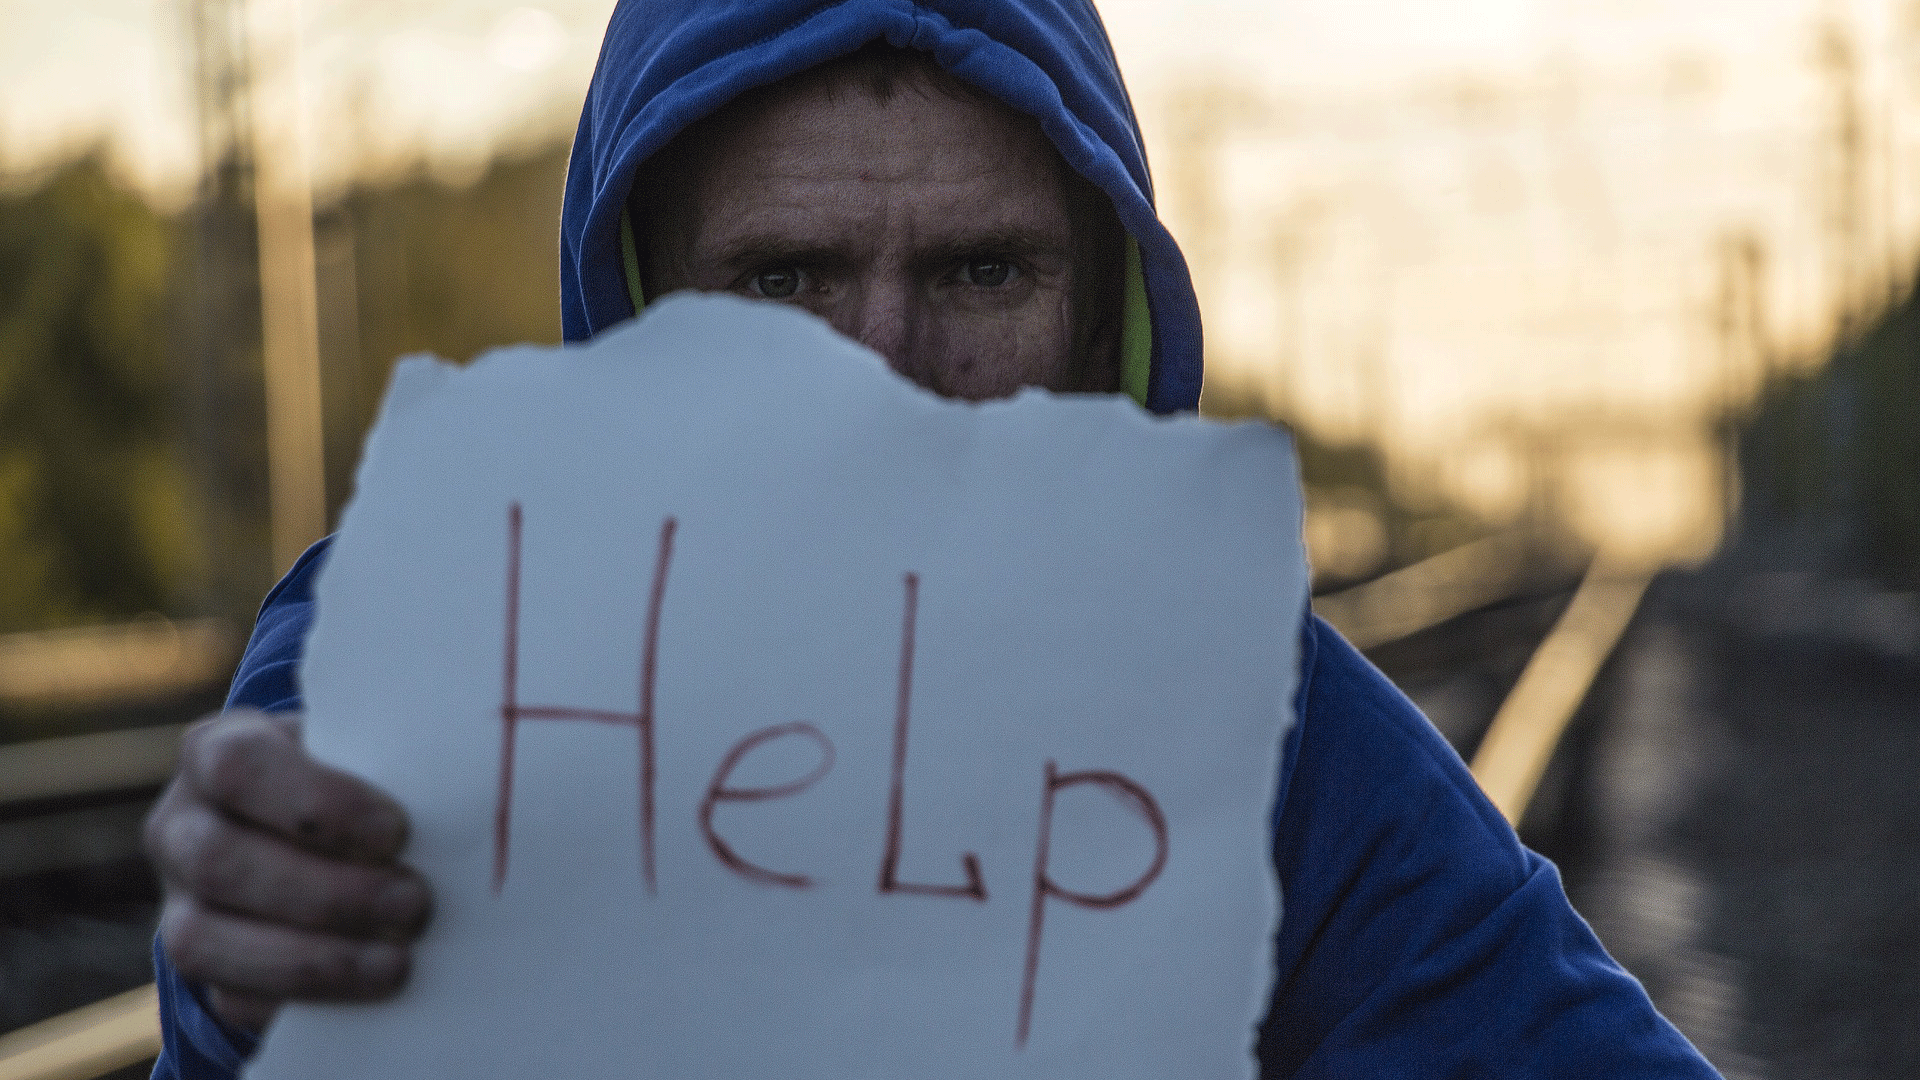 man holding help sign